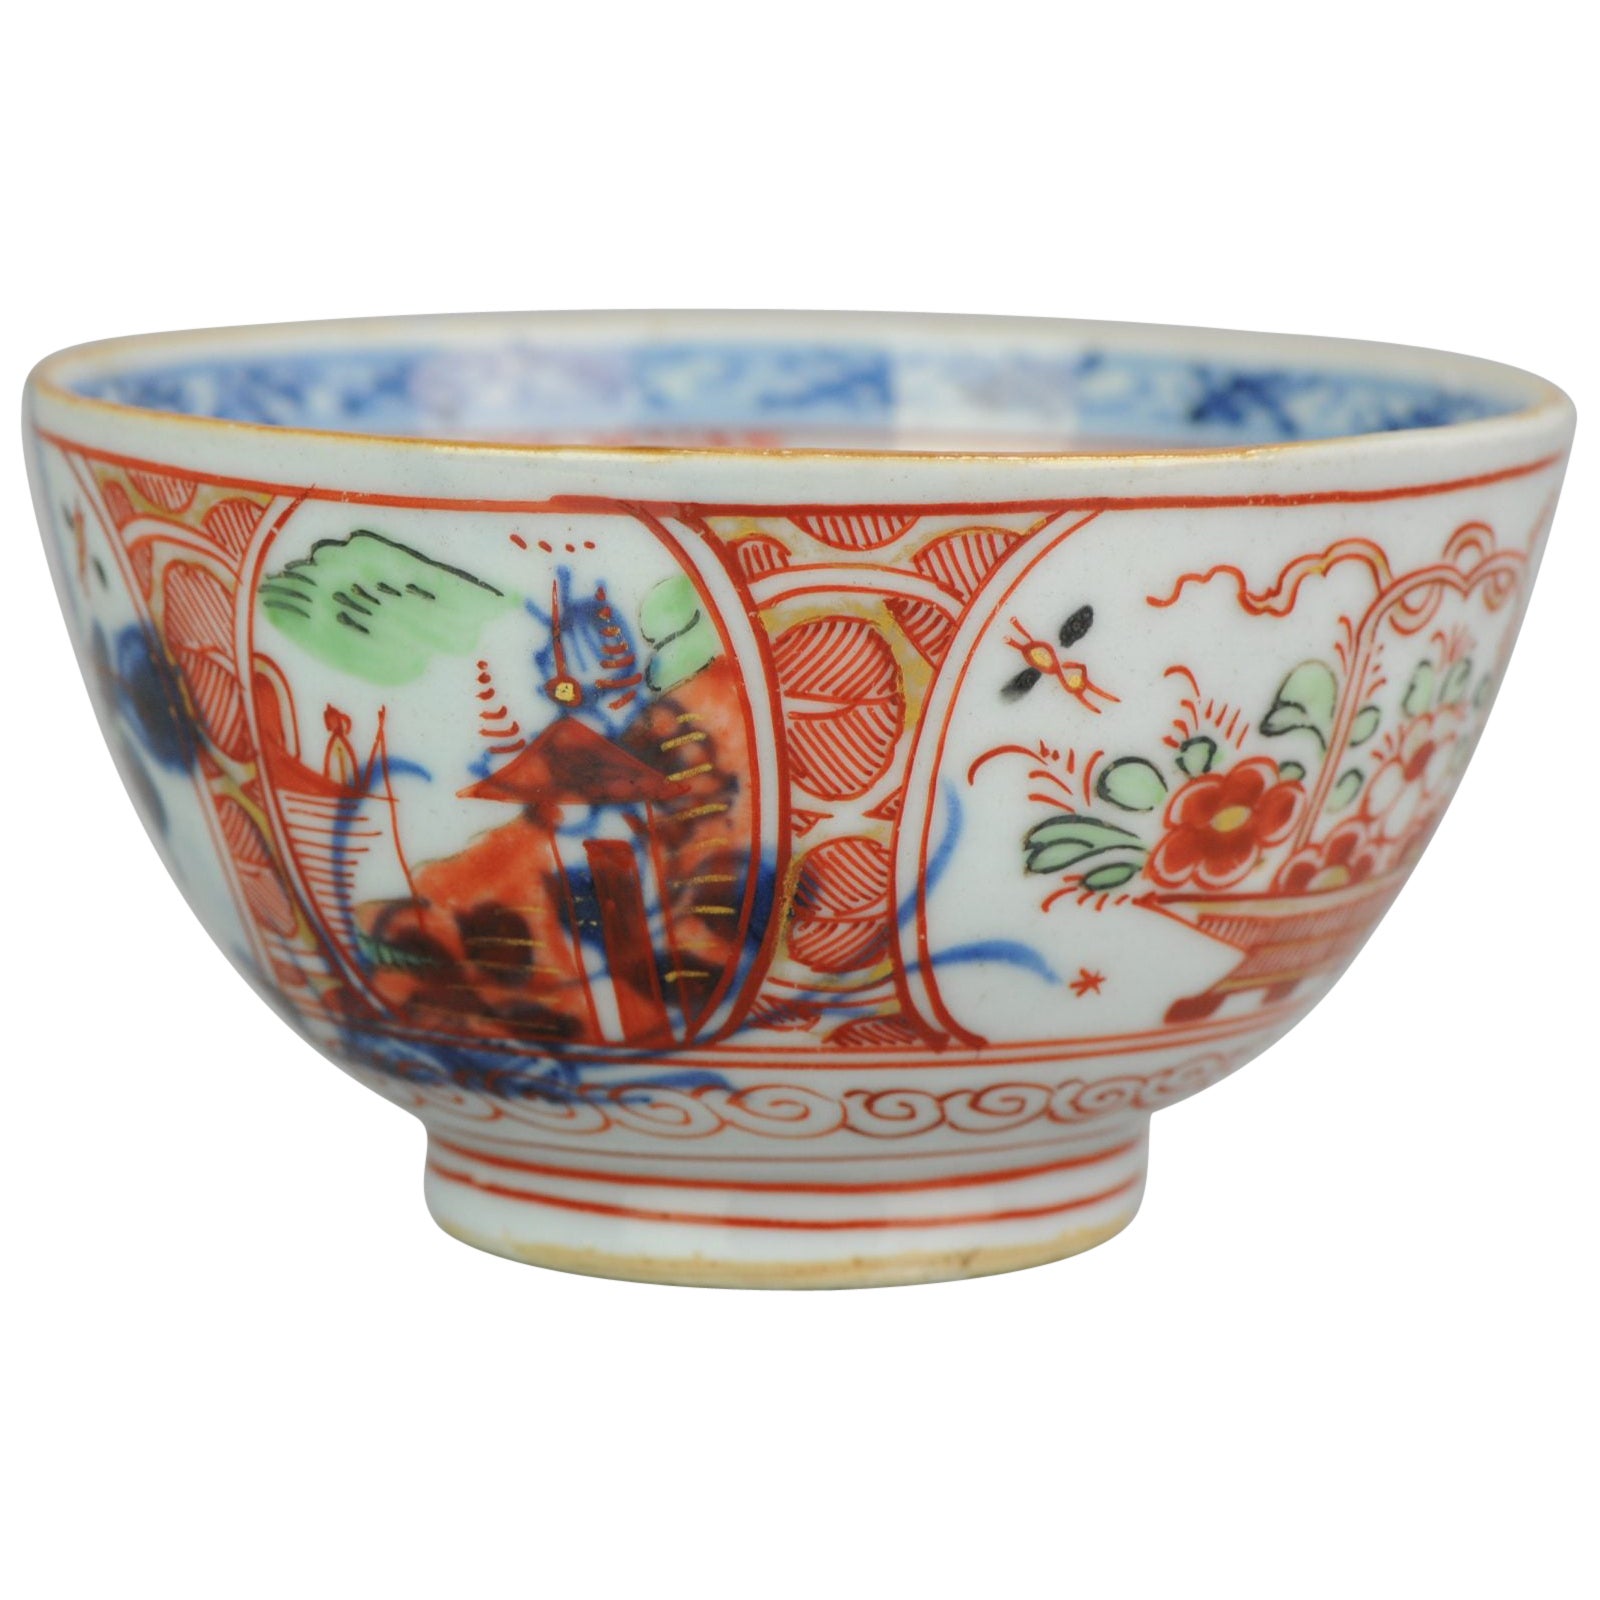 Antique Imari Qing Dynasty Chinese Porcelain Amsterdams Bont Bowl, 18th Century